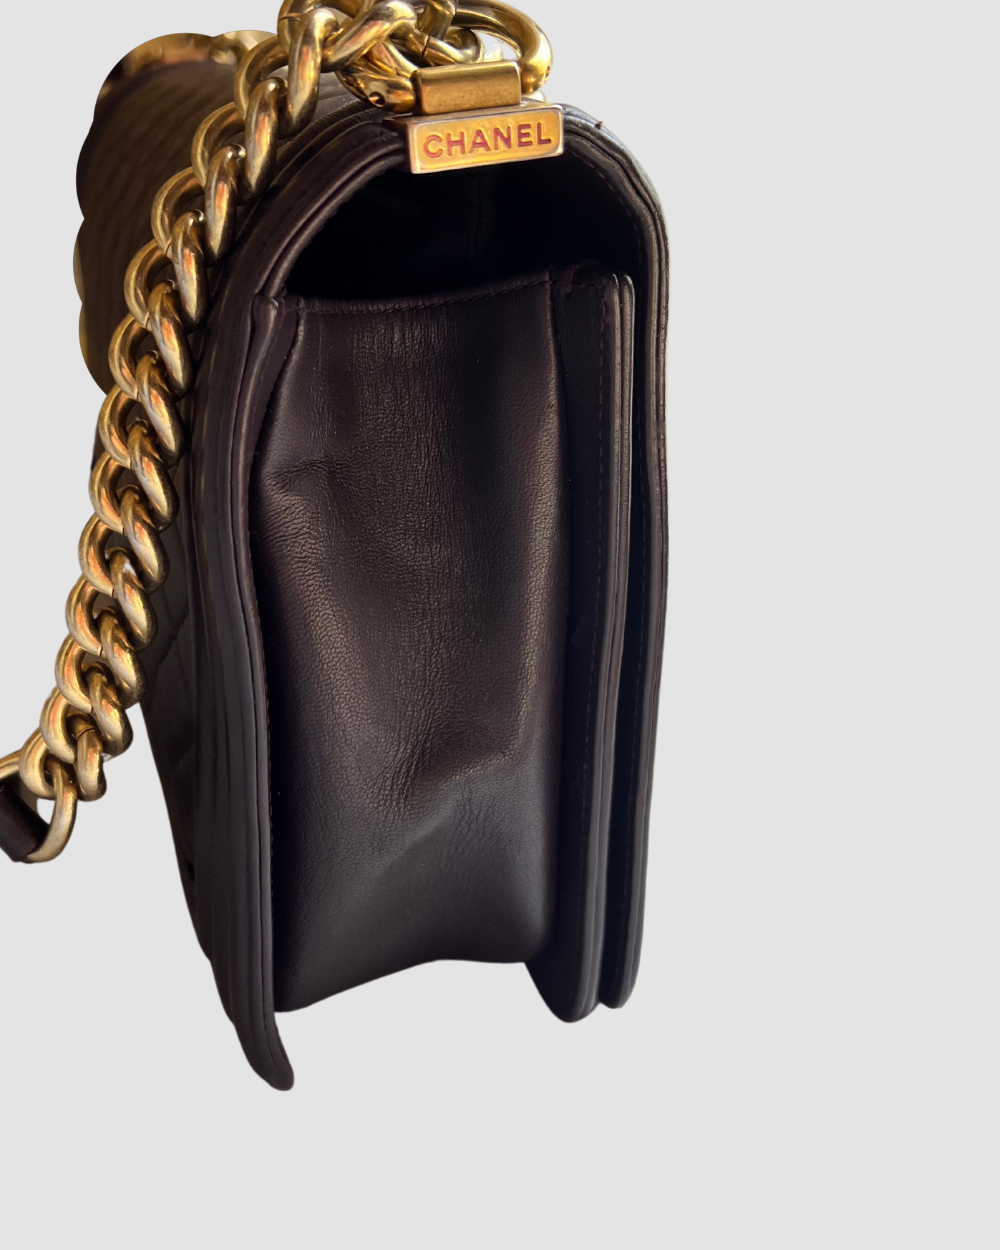 Chanel Boy Bag Aubergine Lambskin GHW #23, D + C